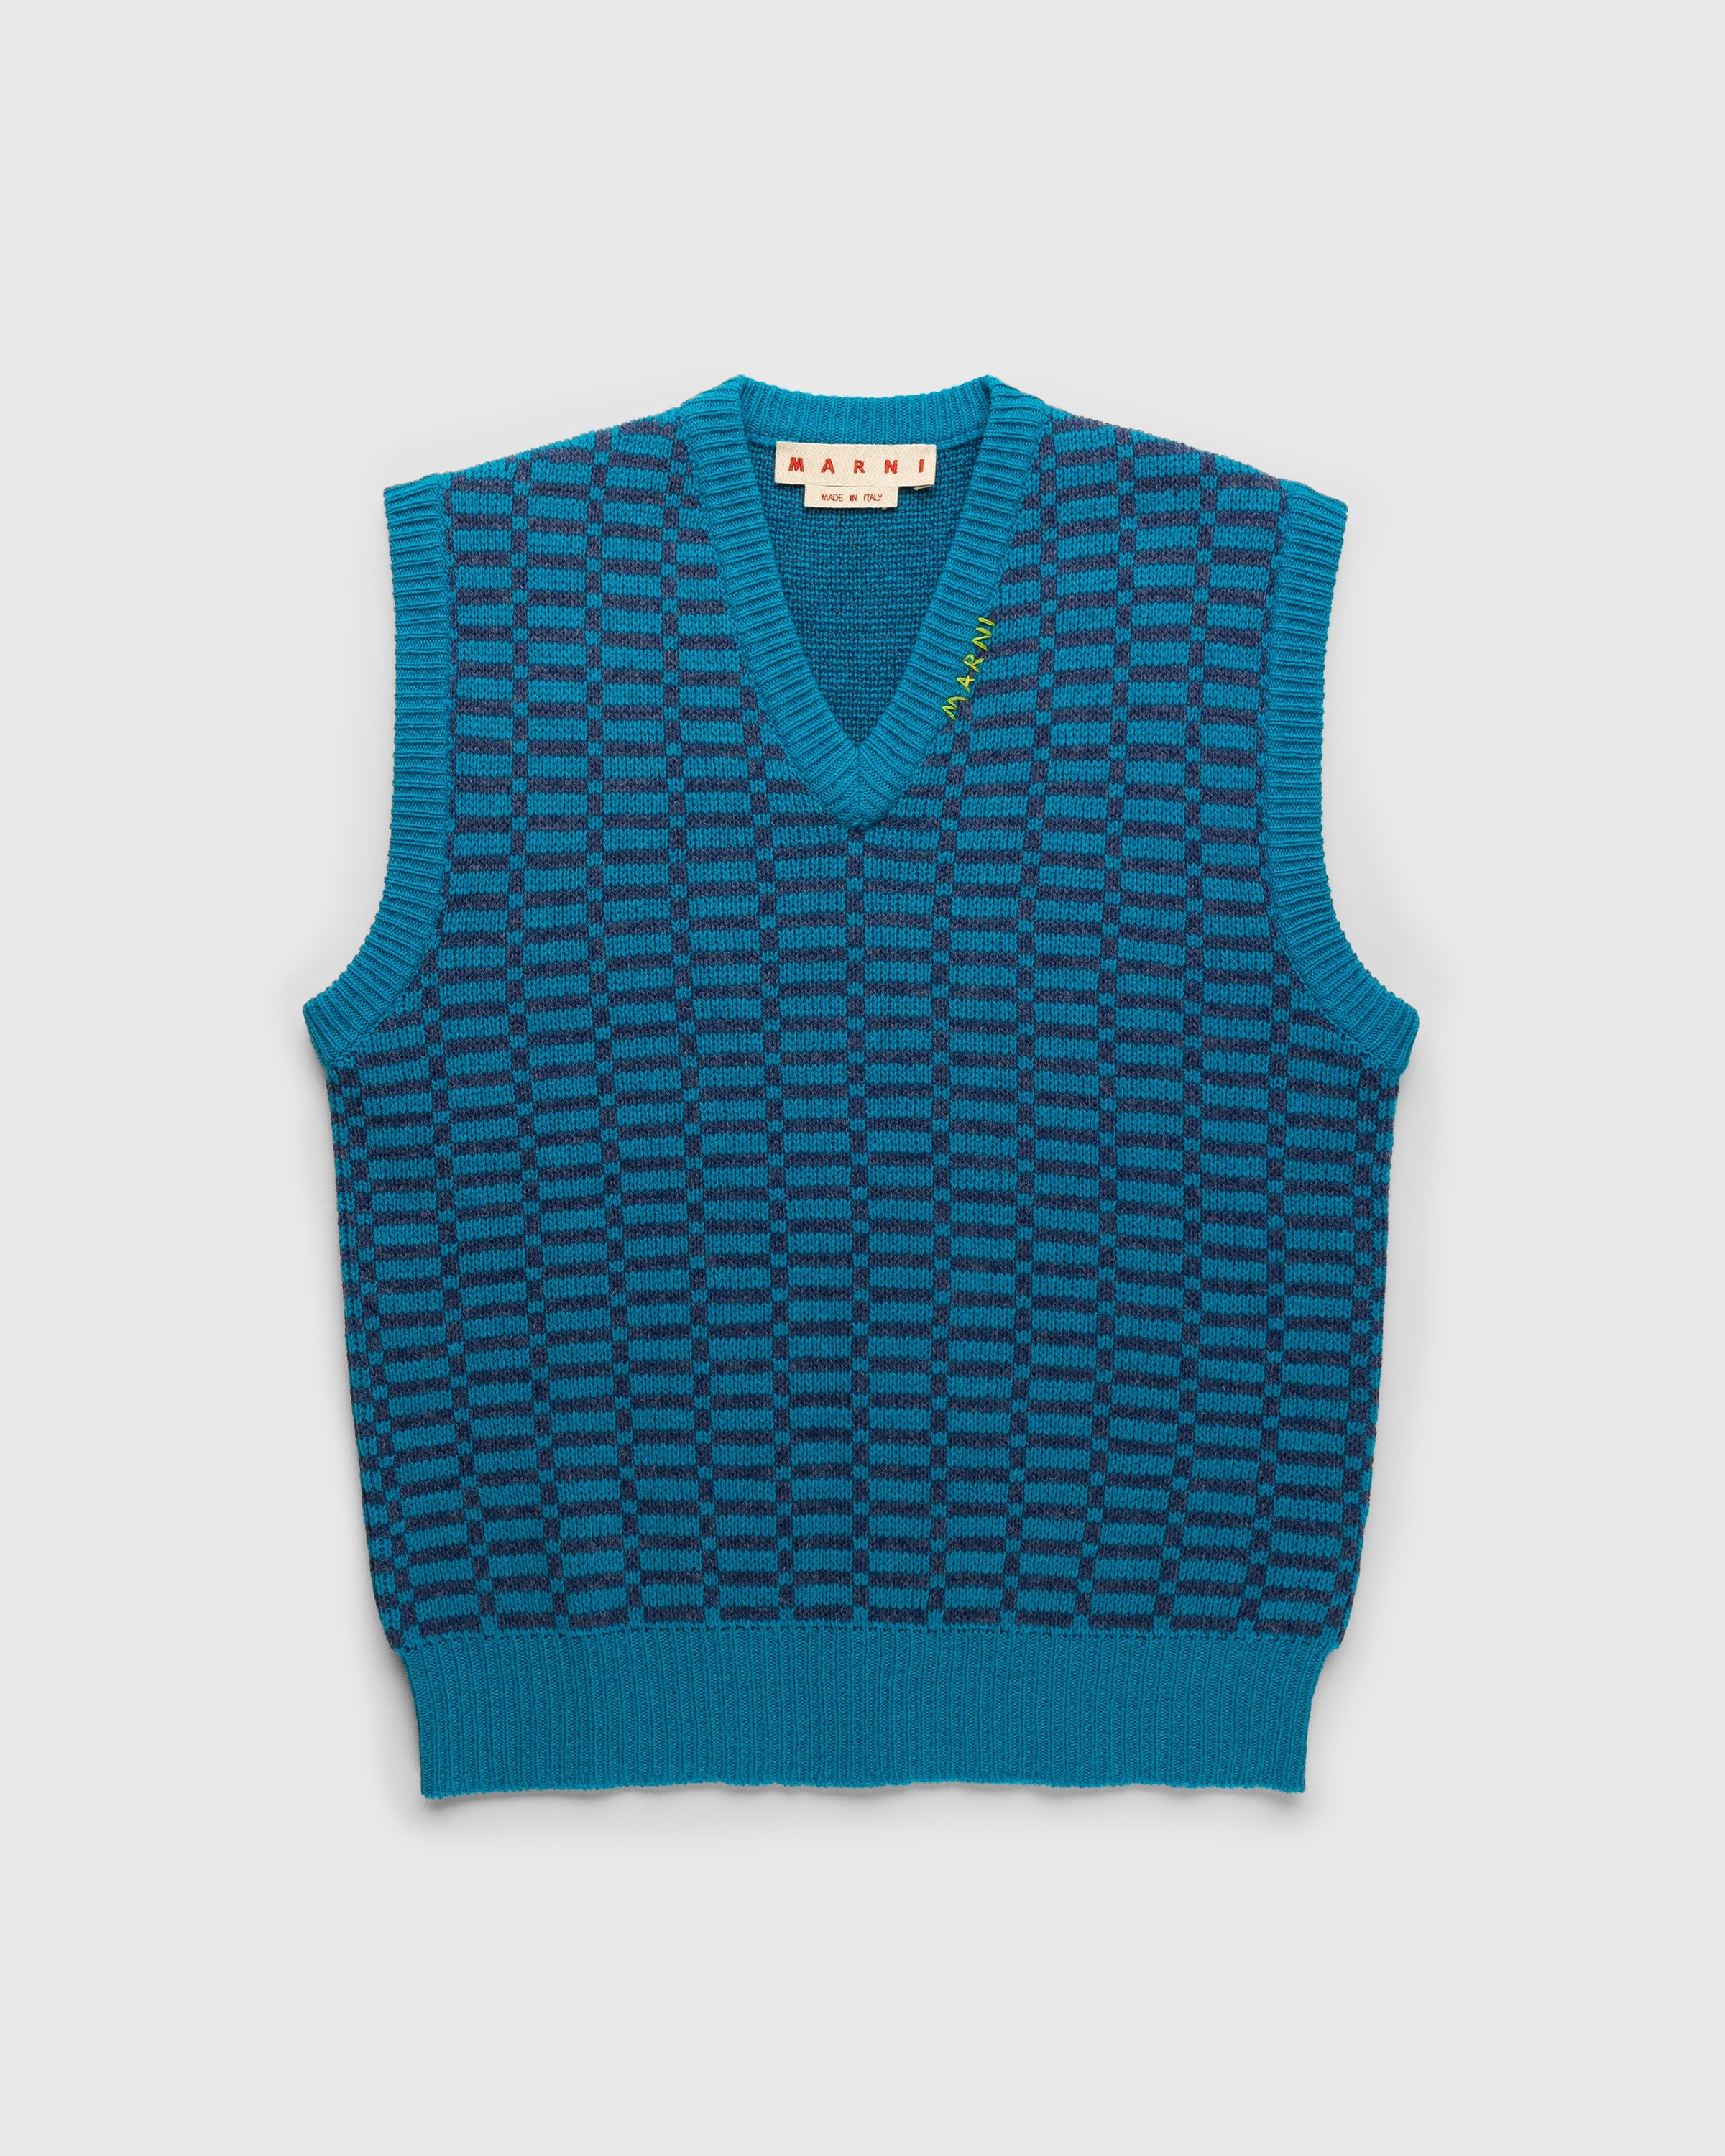 Marni – Shetland Wool V-Neck Sweater Vest Blue - Knitwear - Blue - Image 1